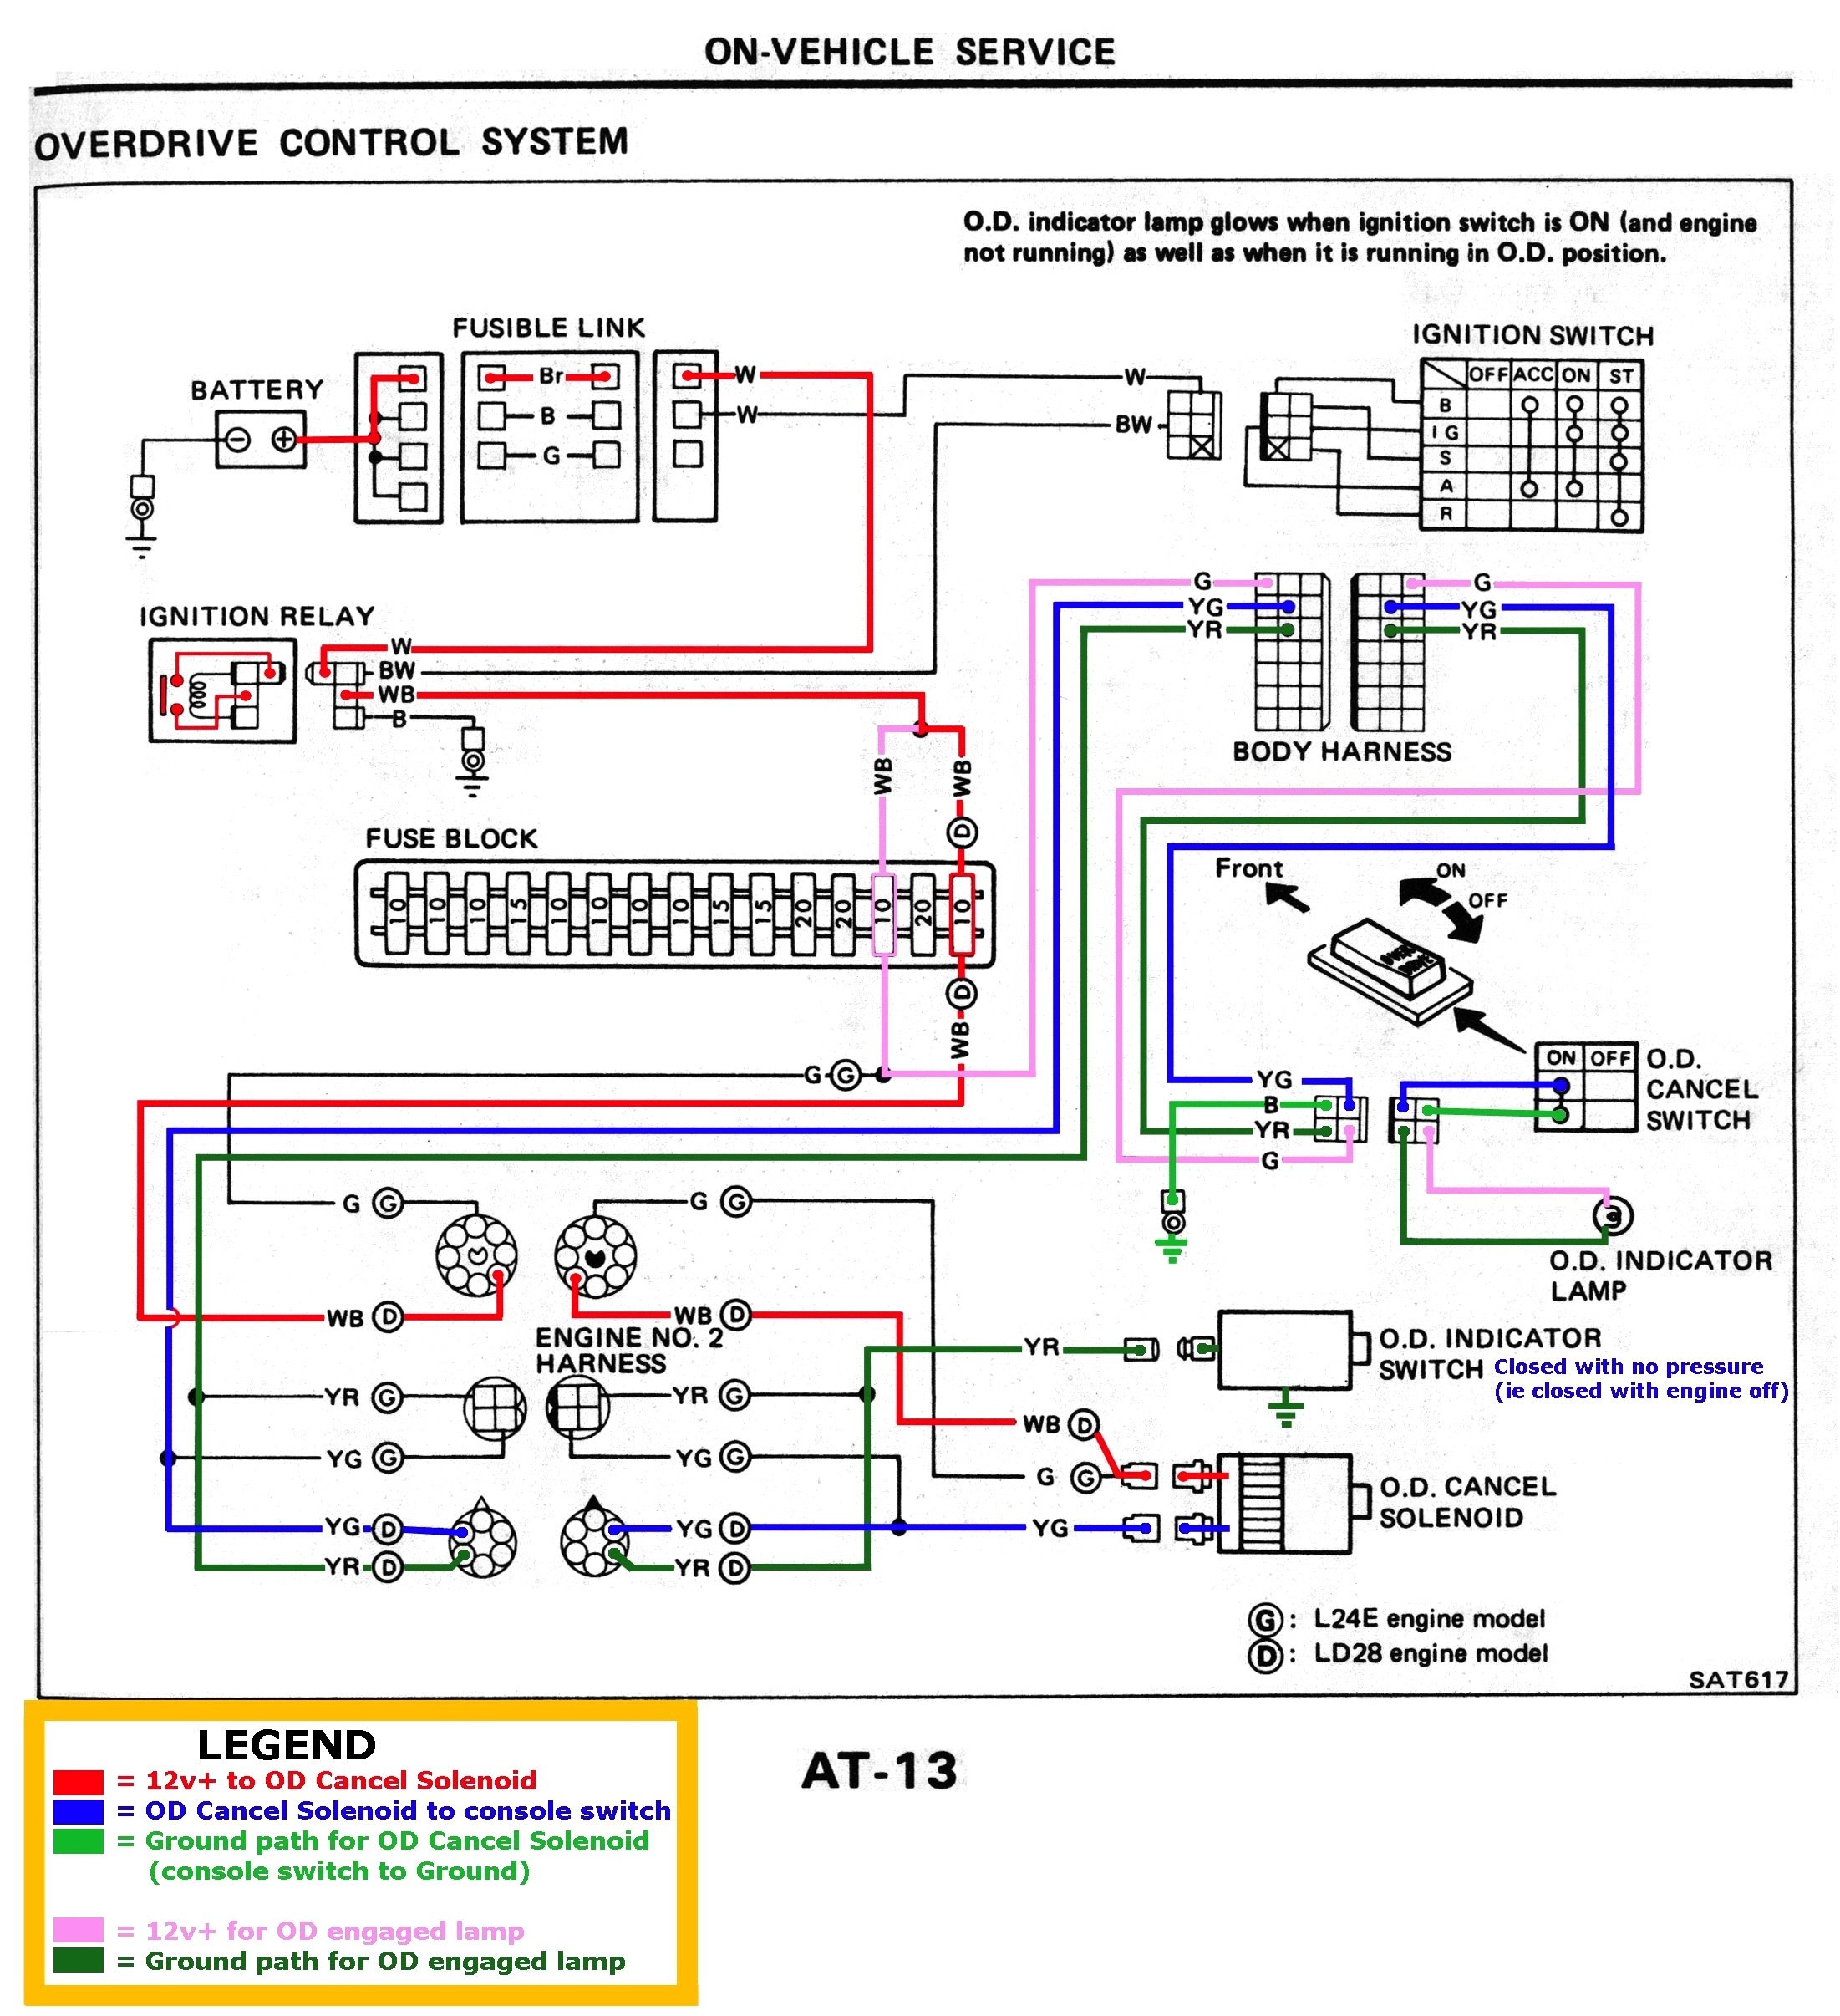 Wiring Diagram Ac pressor Valid Split Unit Wiring Diagram